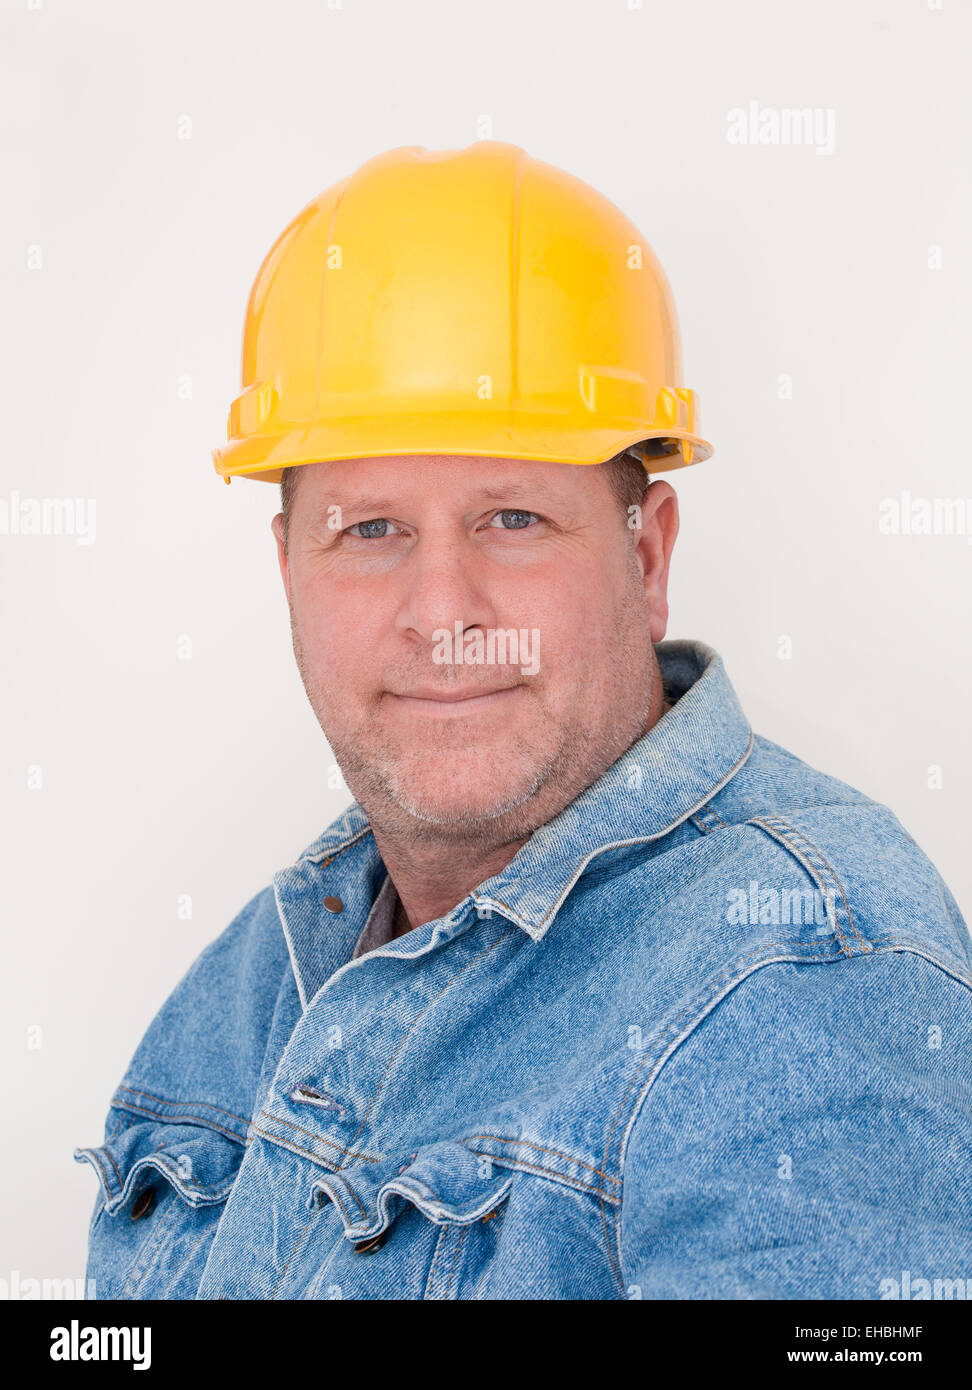 Workman wearing hardhat and jean jacket. White background. Stock Photo